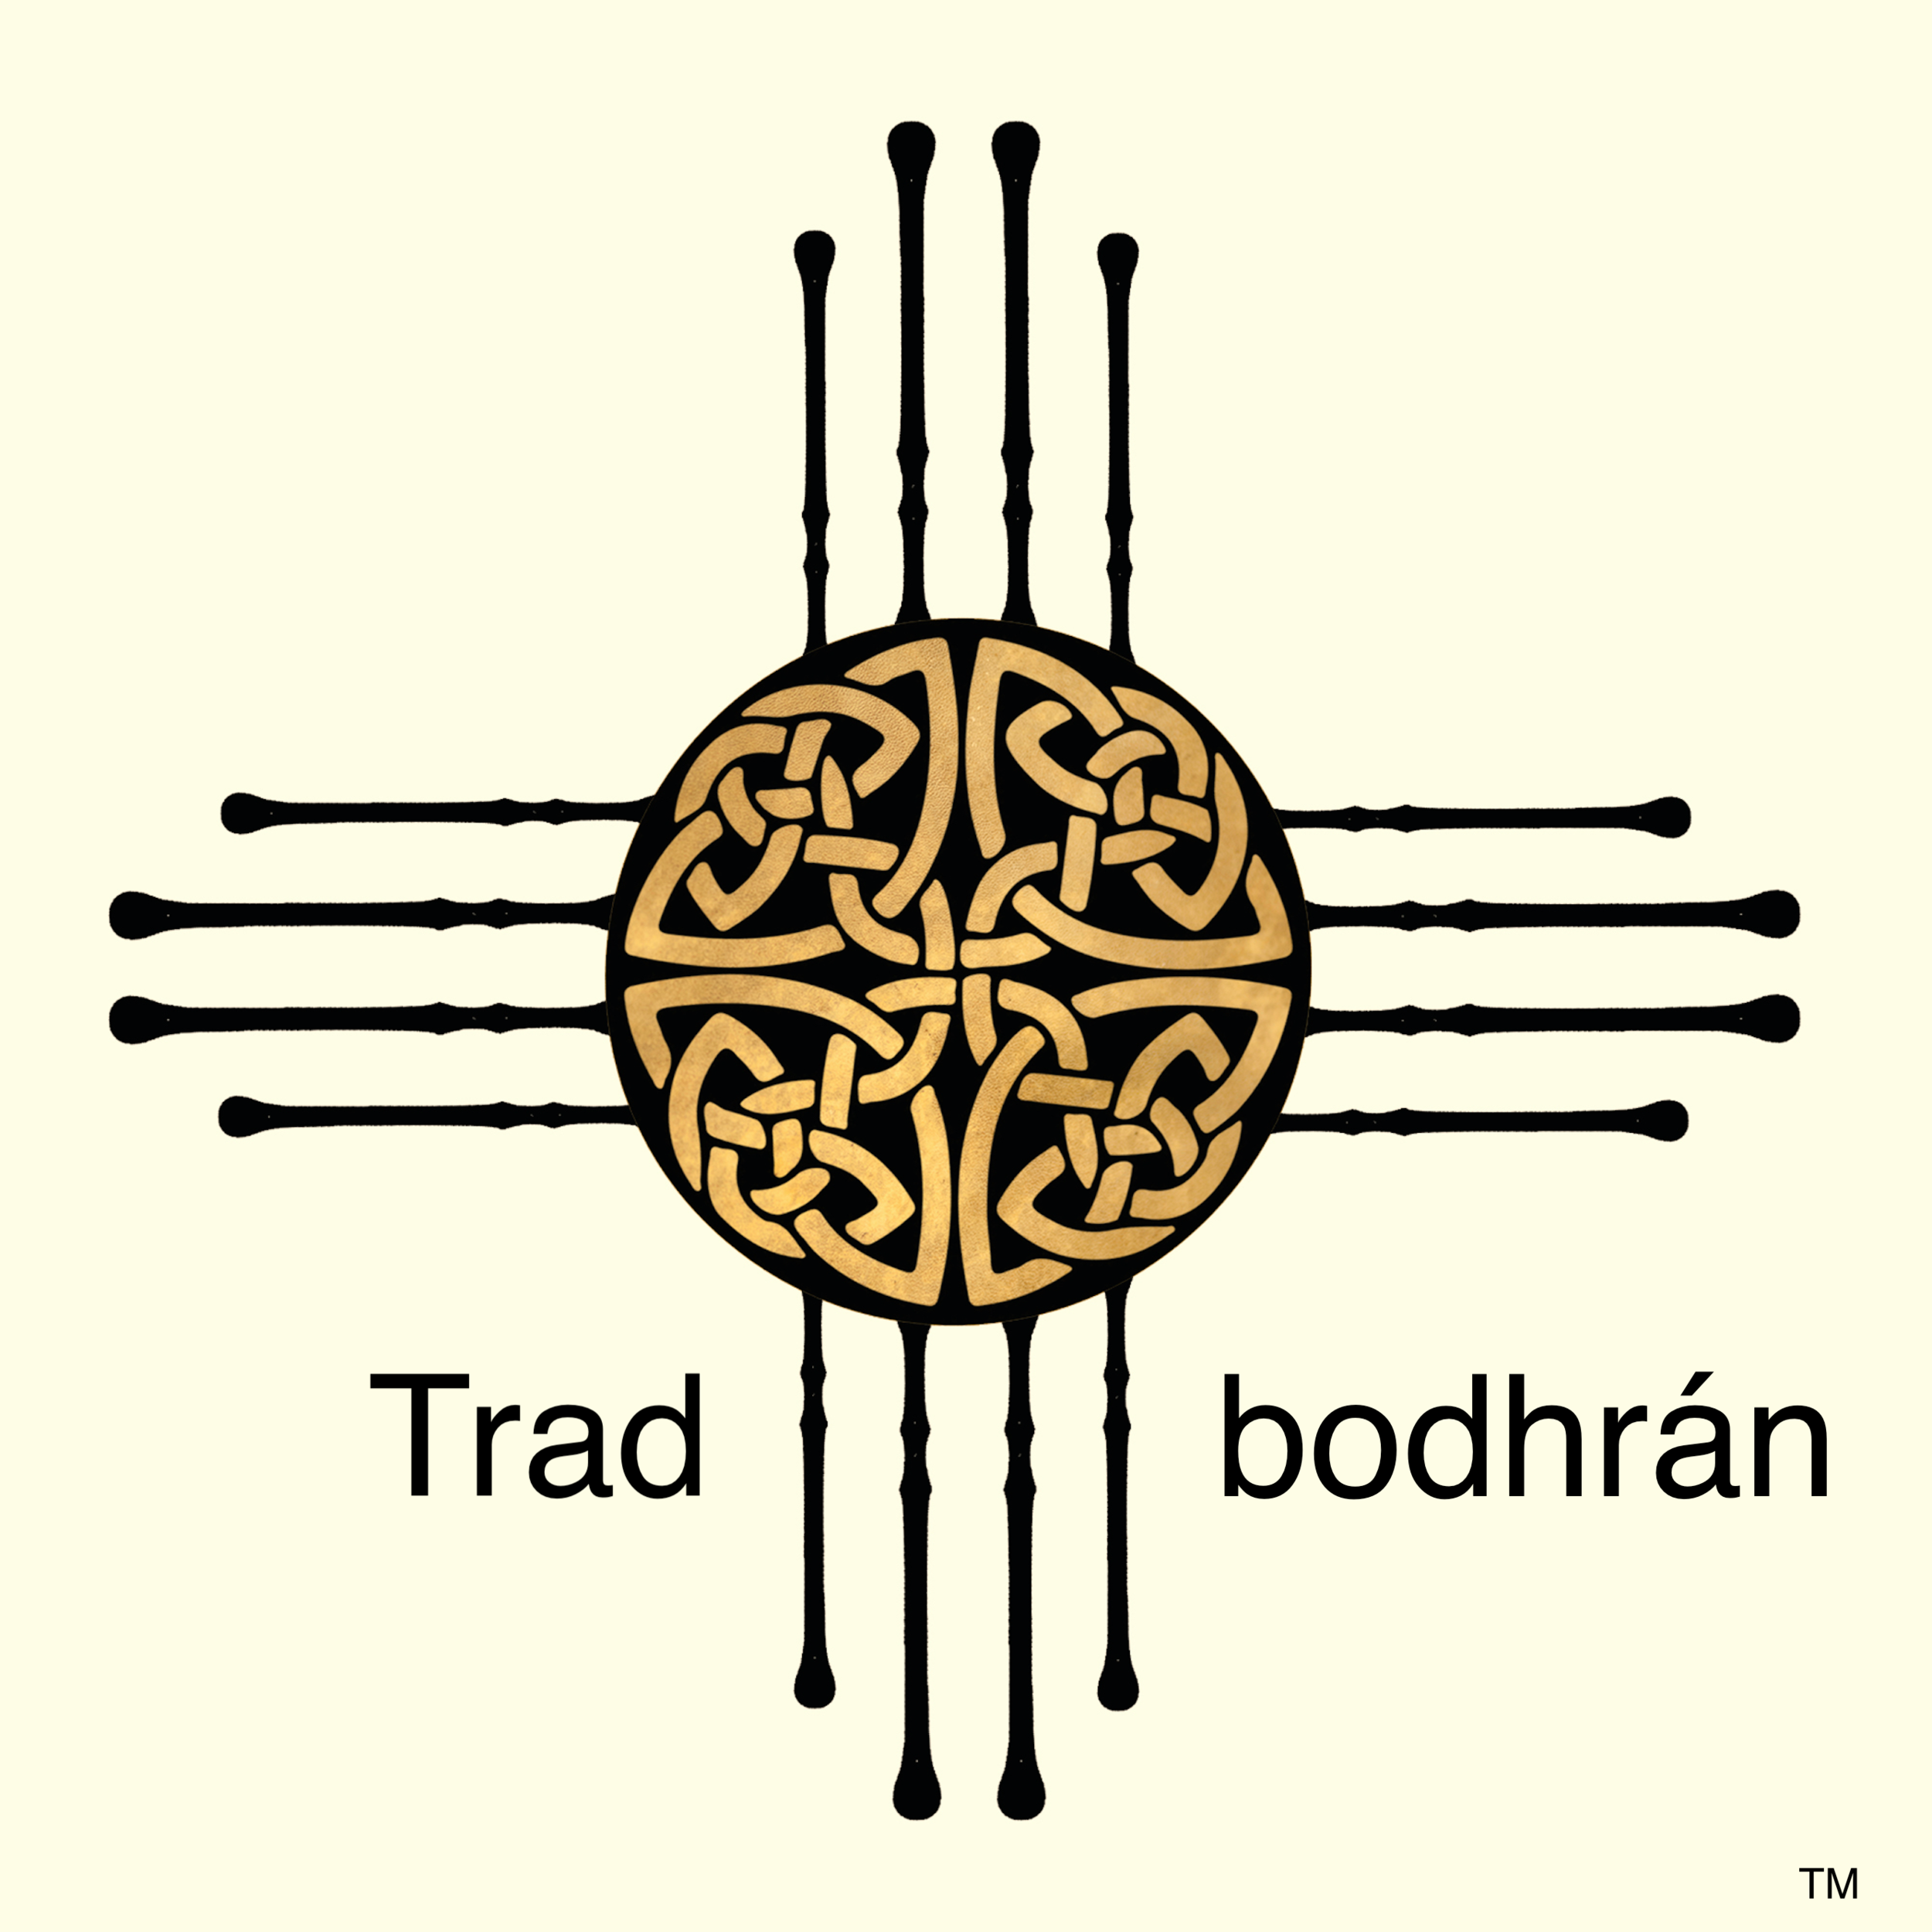 Trad Bodhrán